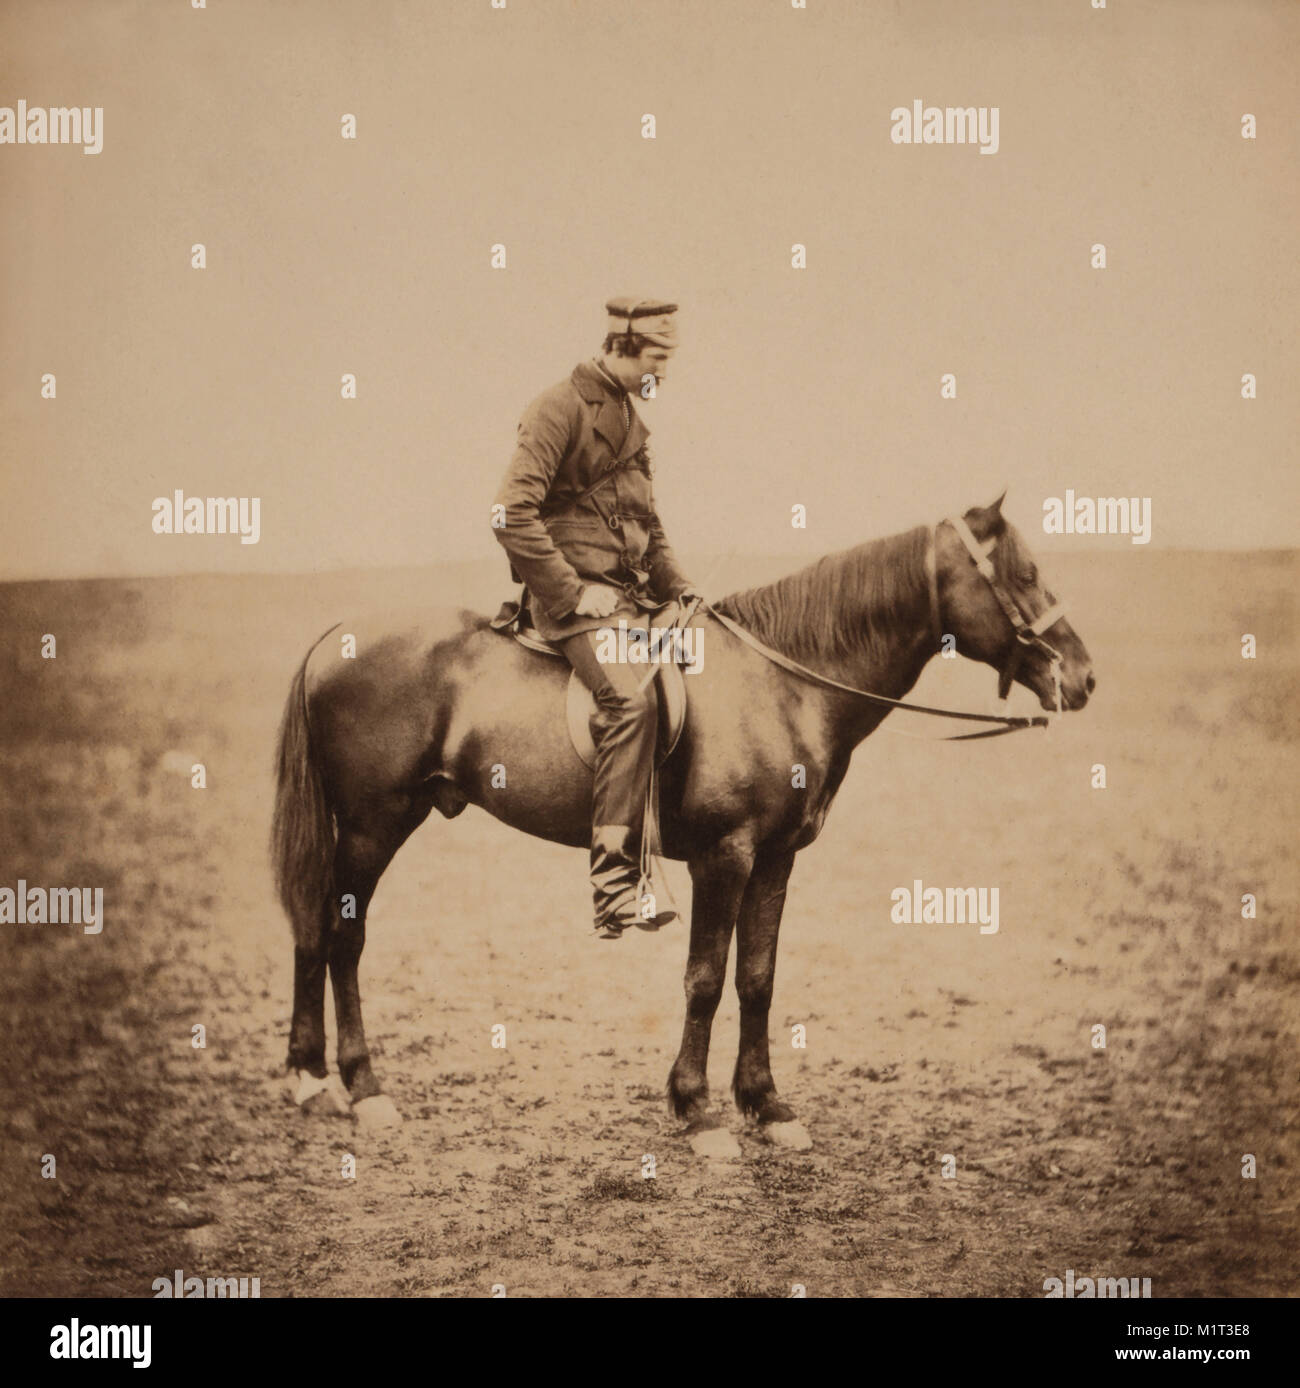 Honourable British Major Augustus Murray Cathcart, Full-Length Portrait in Uniform Sitting on Horse, Crimean War, Crimea, Ukraine, by Roger Fenton, 1855 Stock Photo